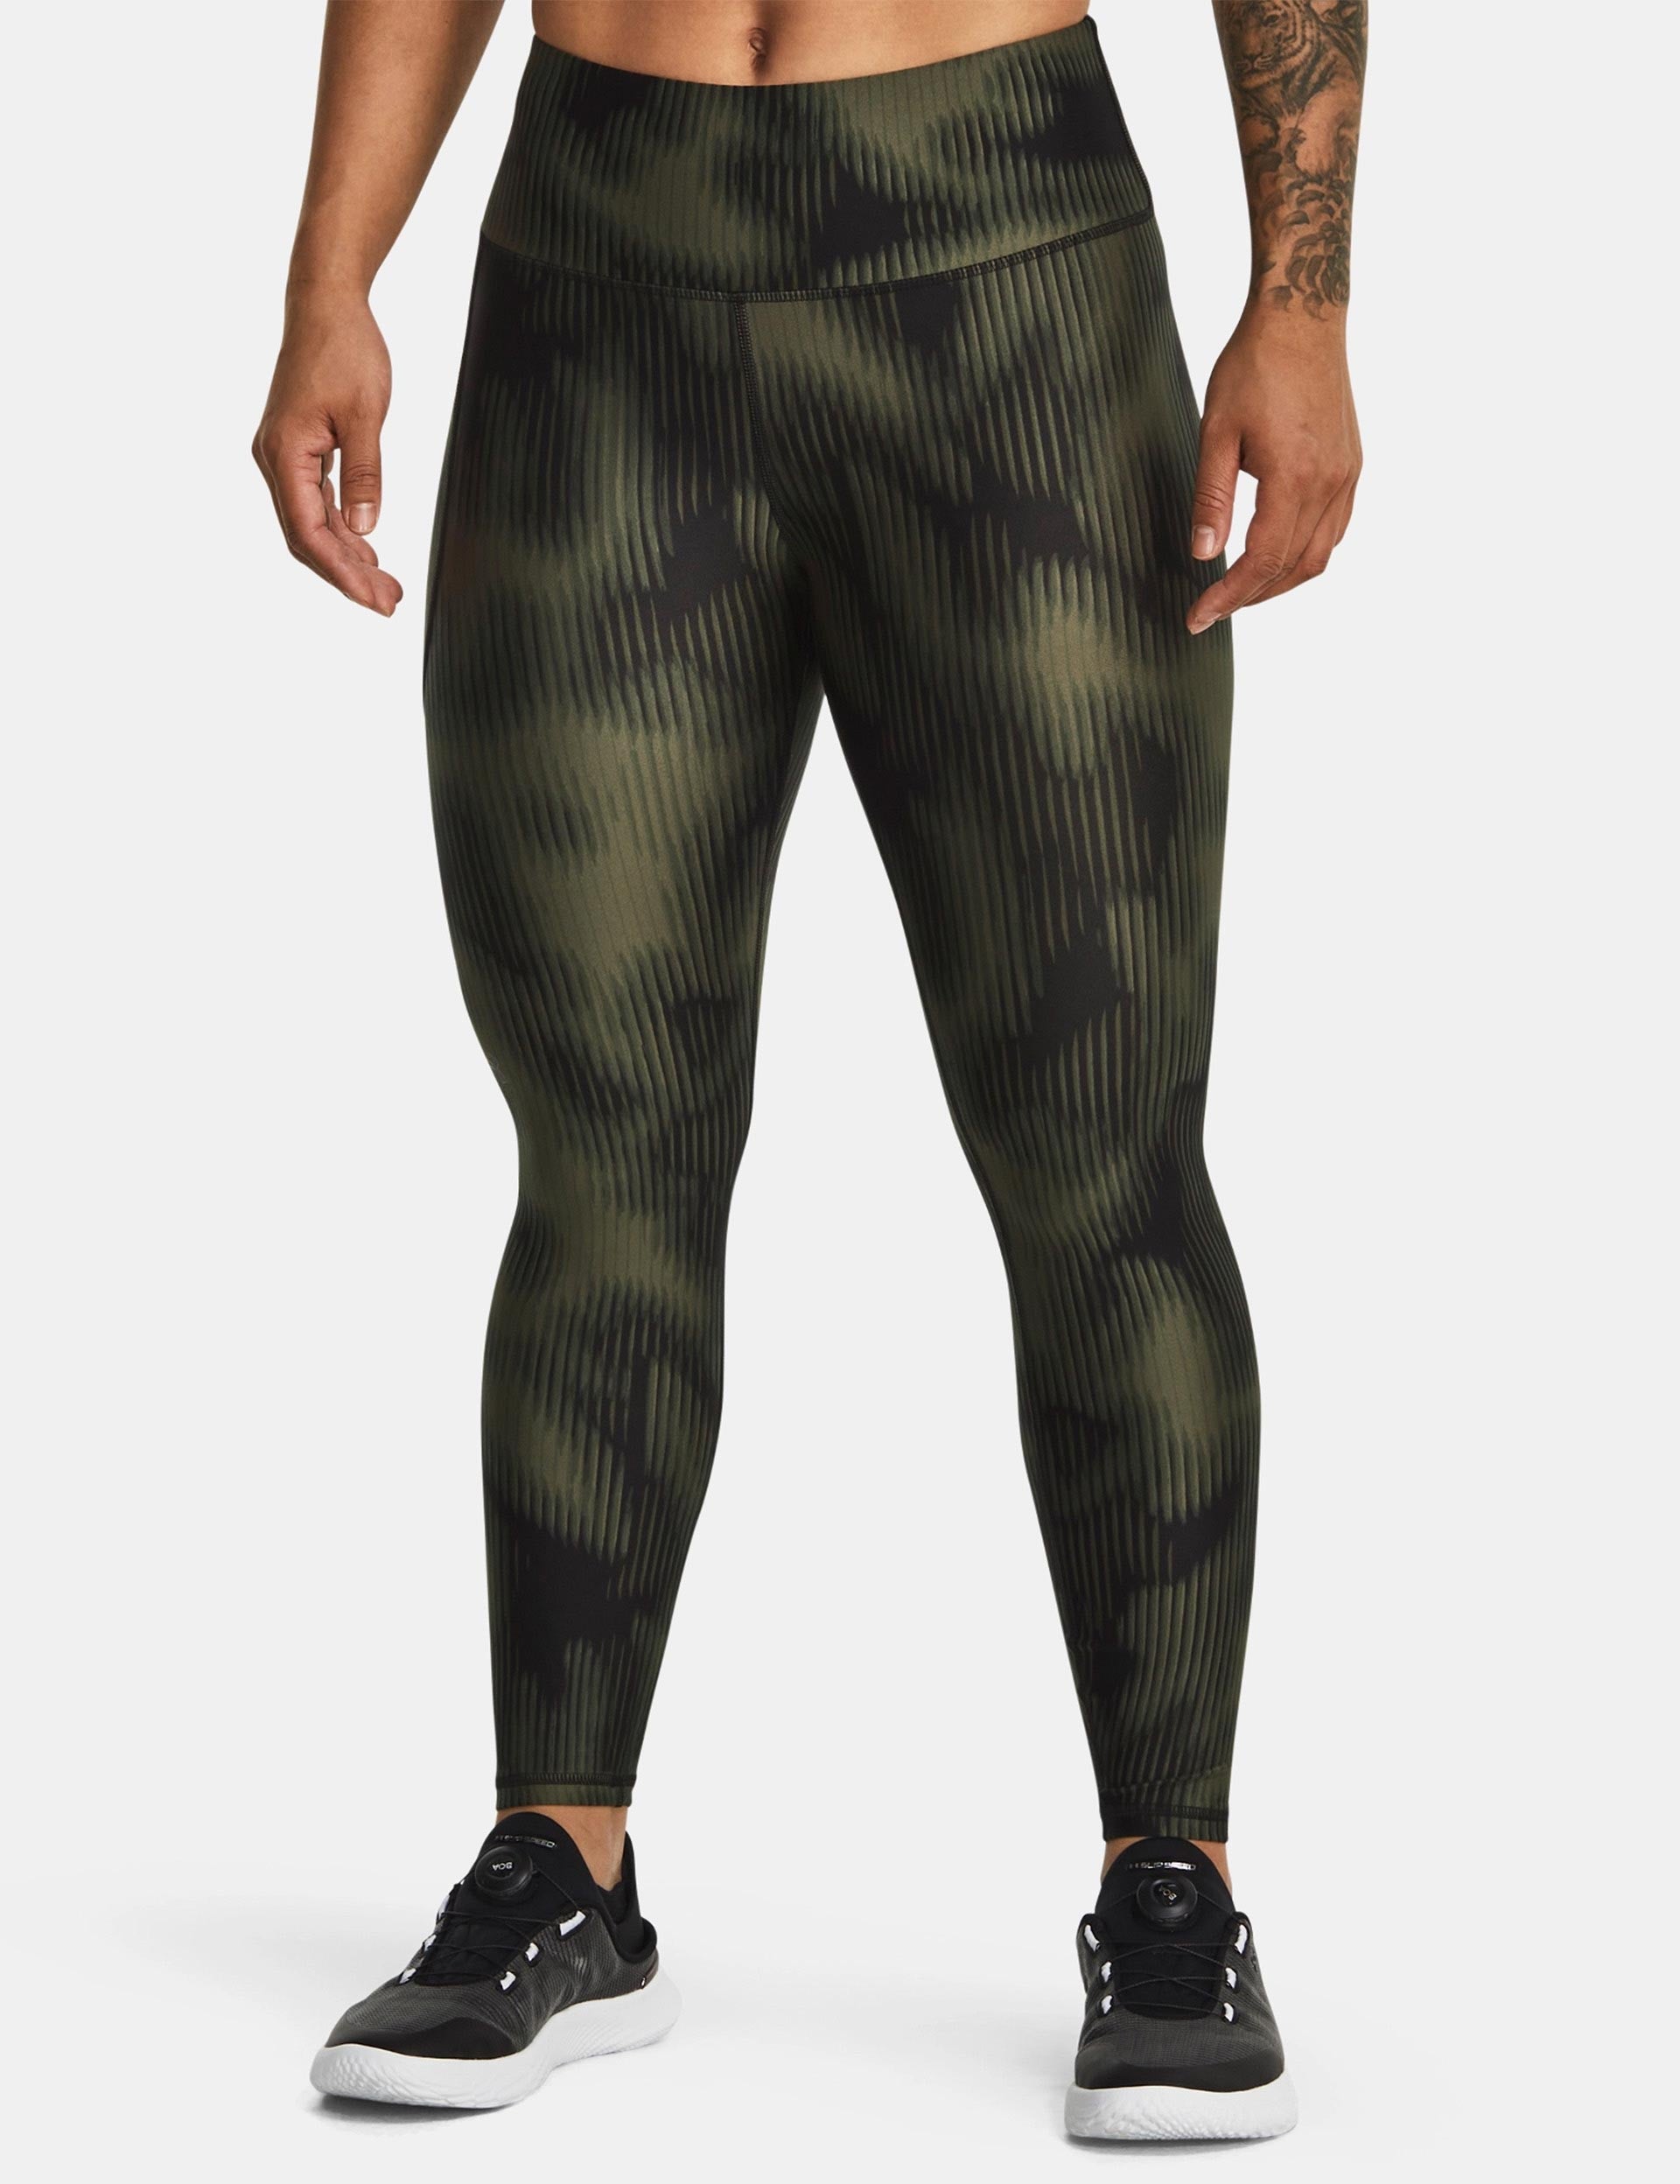 leggings Under Armour HeatGear Armour Printed - Marine OD Green